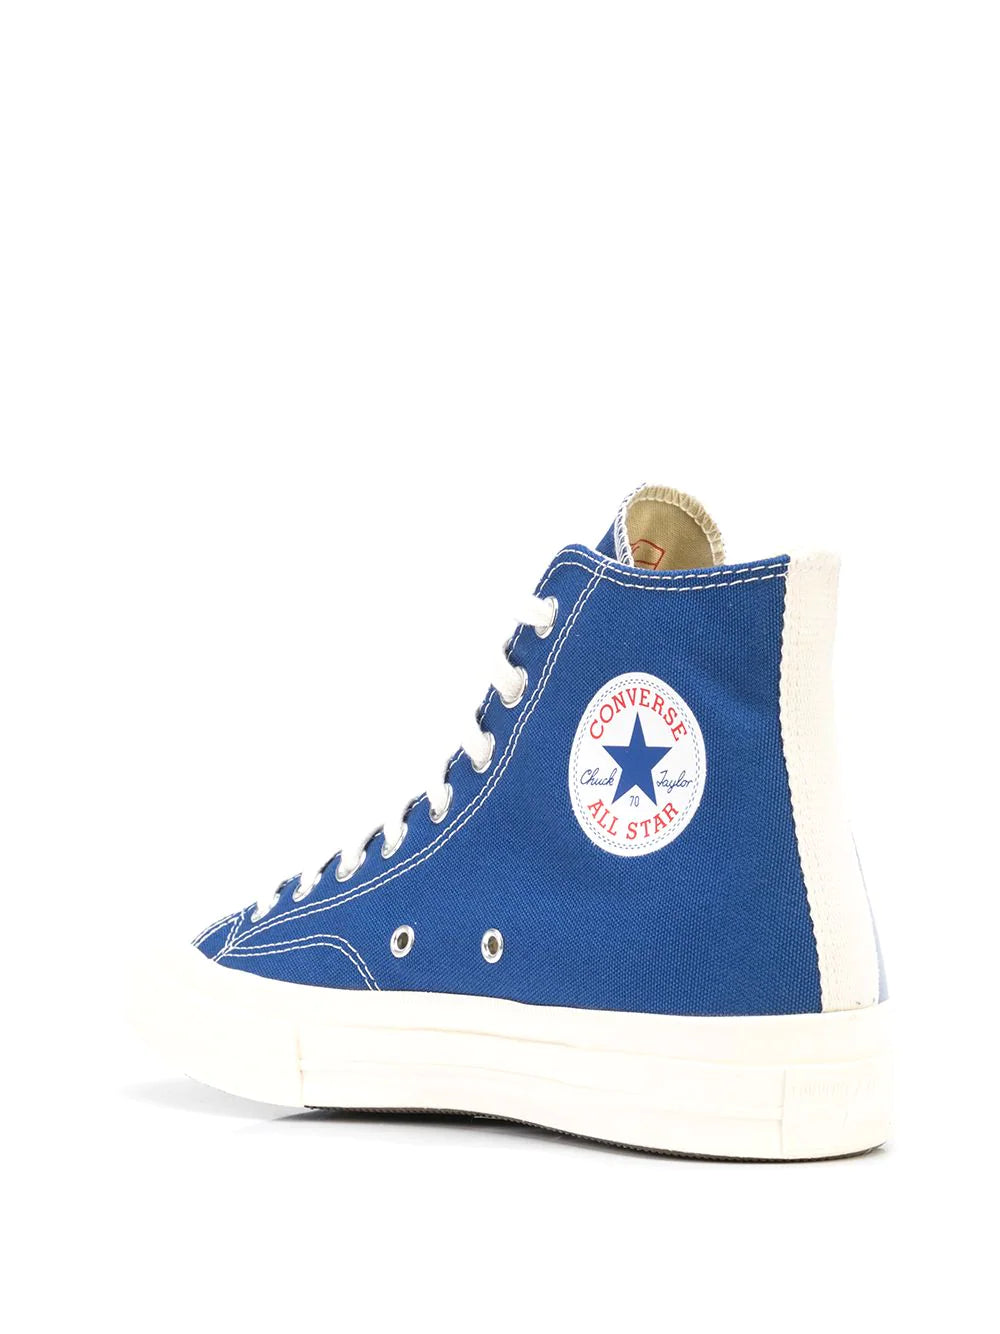 Converse Chuck 70 - blue high-top sneakers